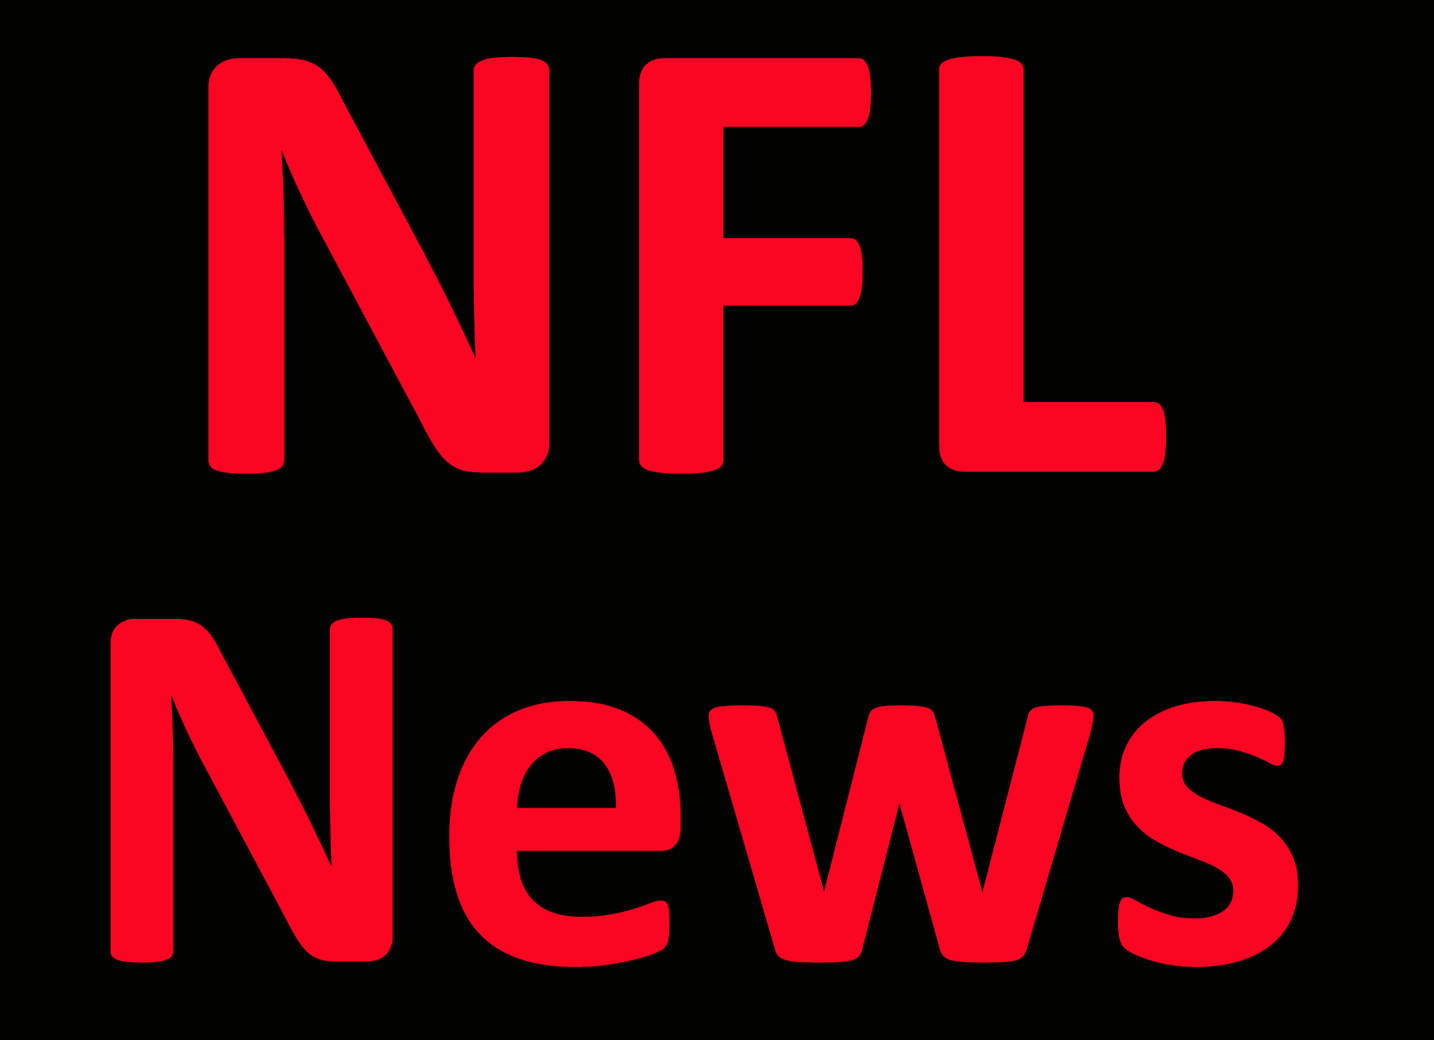 NFL News: Wild NFL comebacks lead to big swings at books Per Report